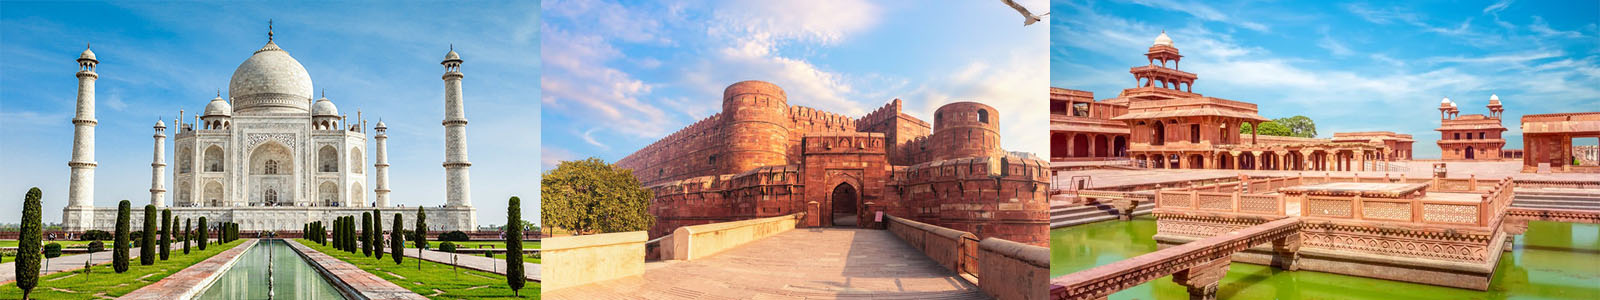 Agra City Private Tour Including Taj Mahal, Agra Fort, Baby Taj & Sikandra